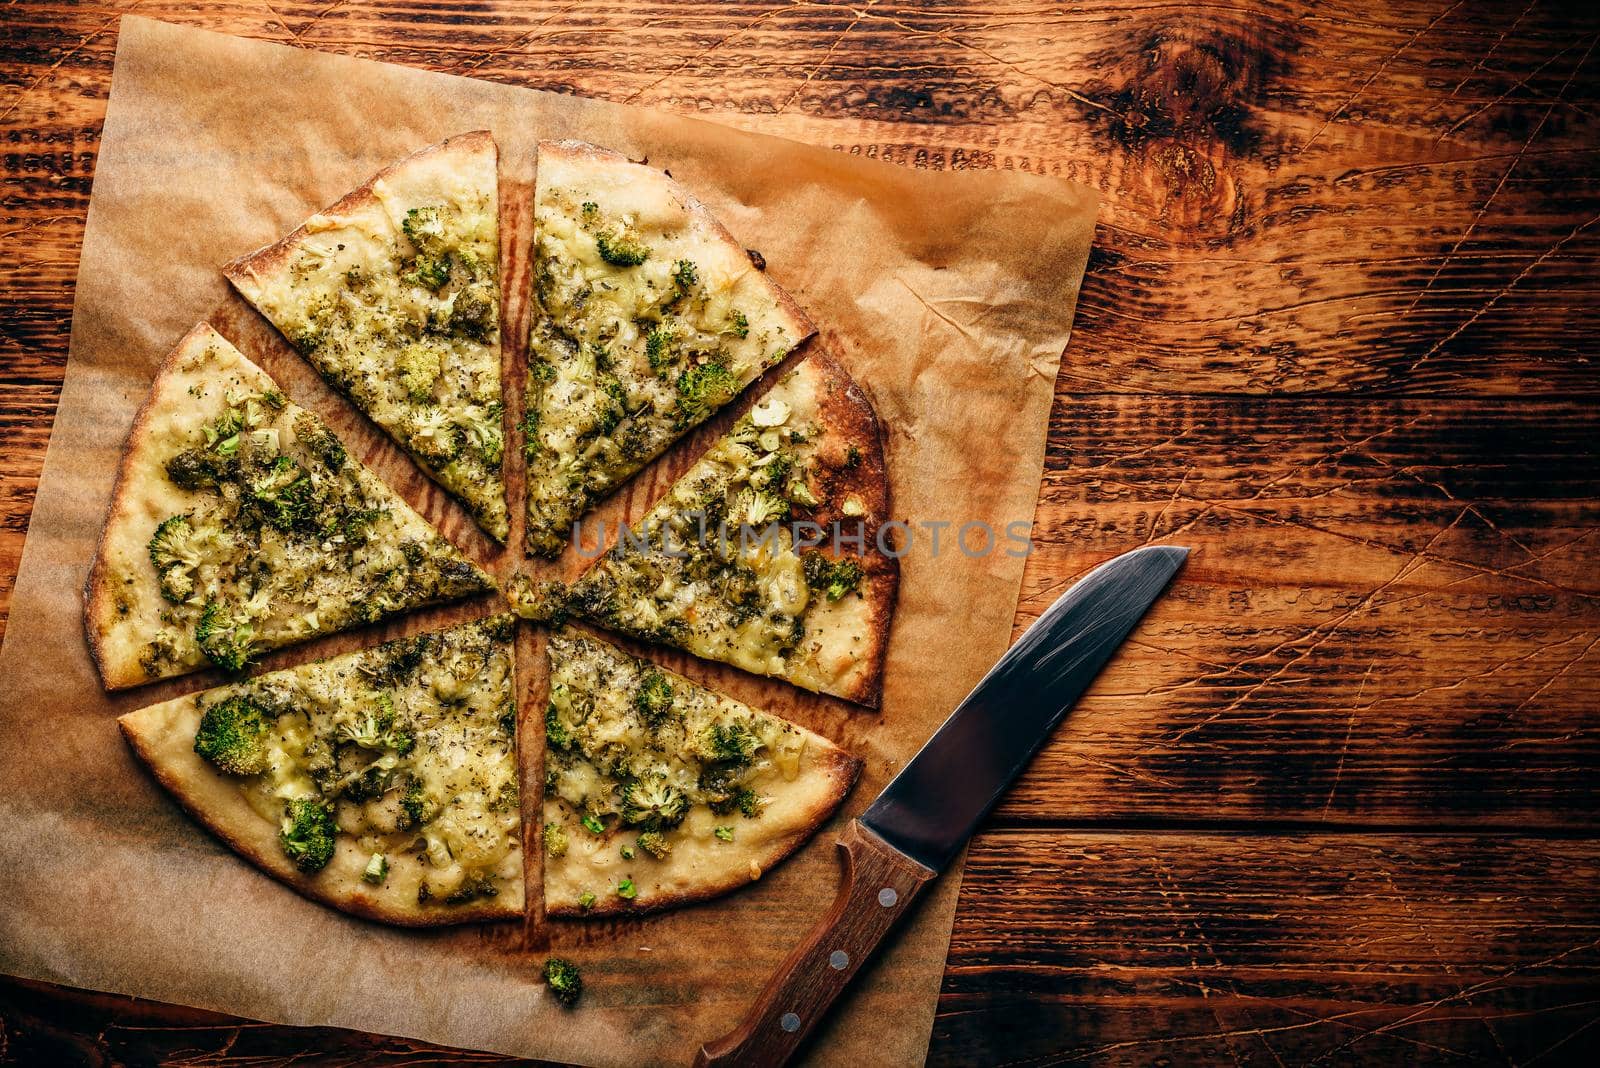 Italian pizza with broccoli, pesto and cheese by Seva_blsv